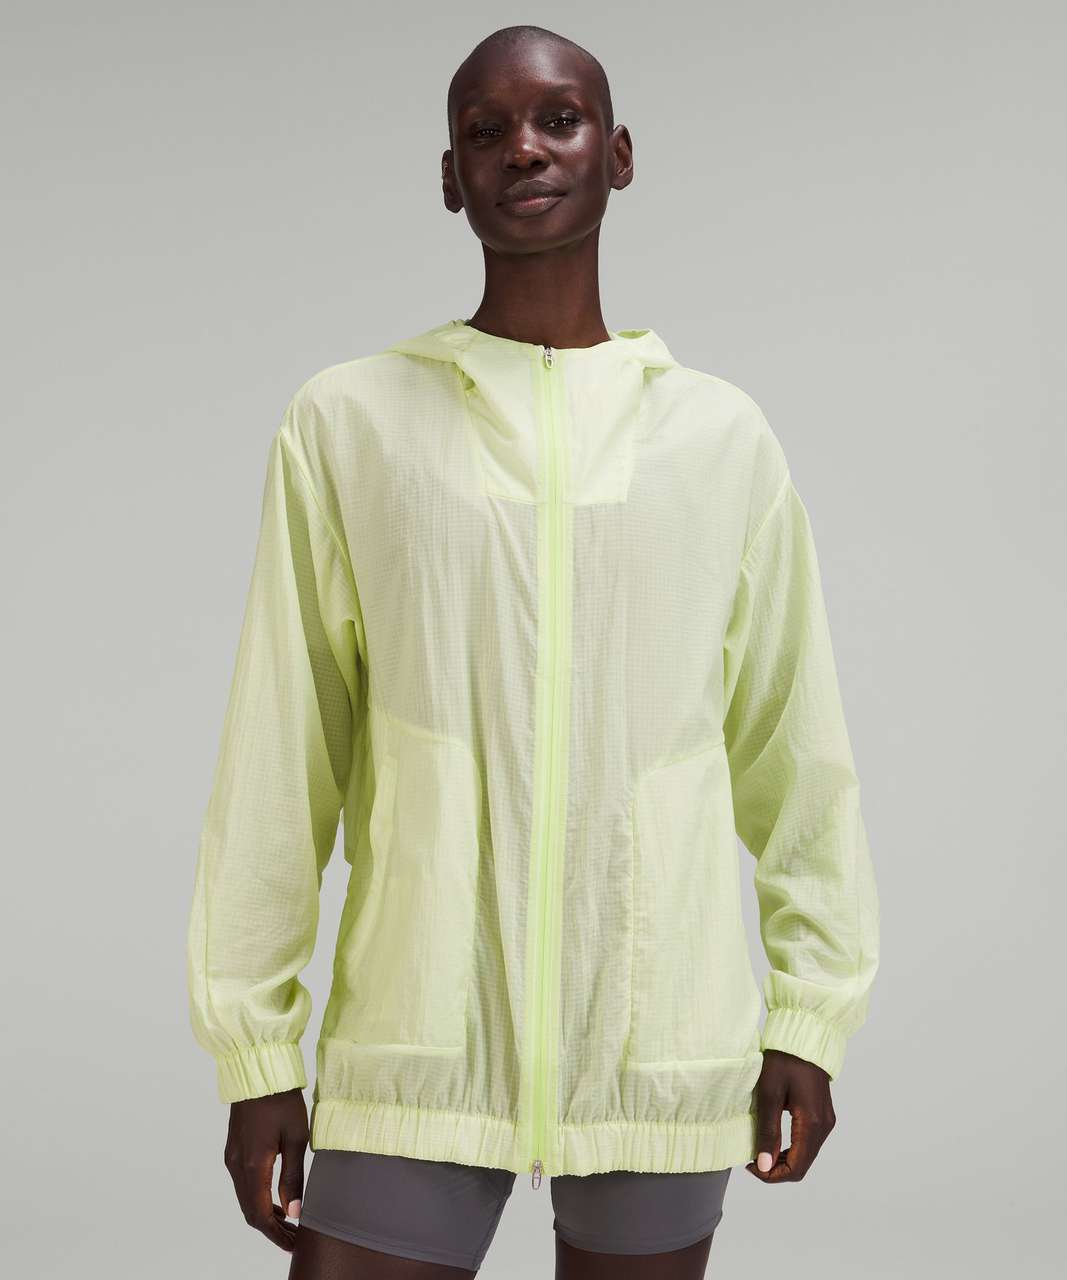 Lululemon lab Translucent Hooded Jacket - Crispin Green